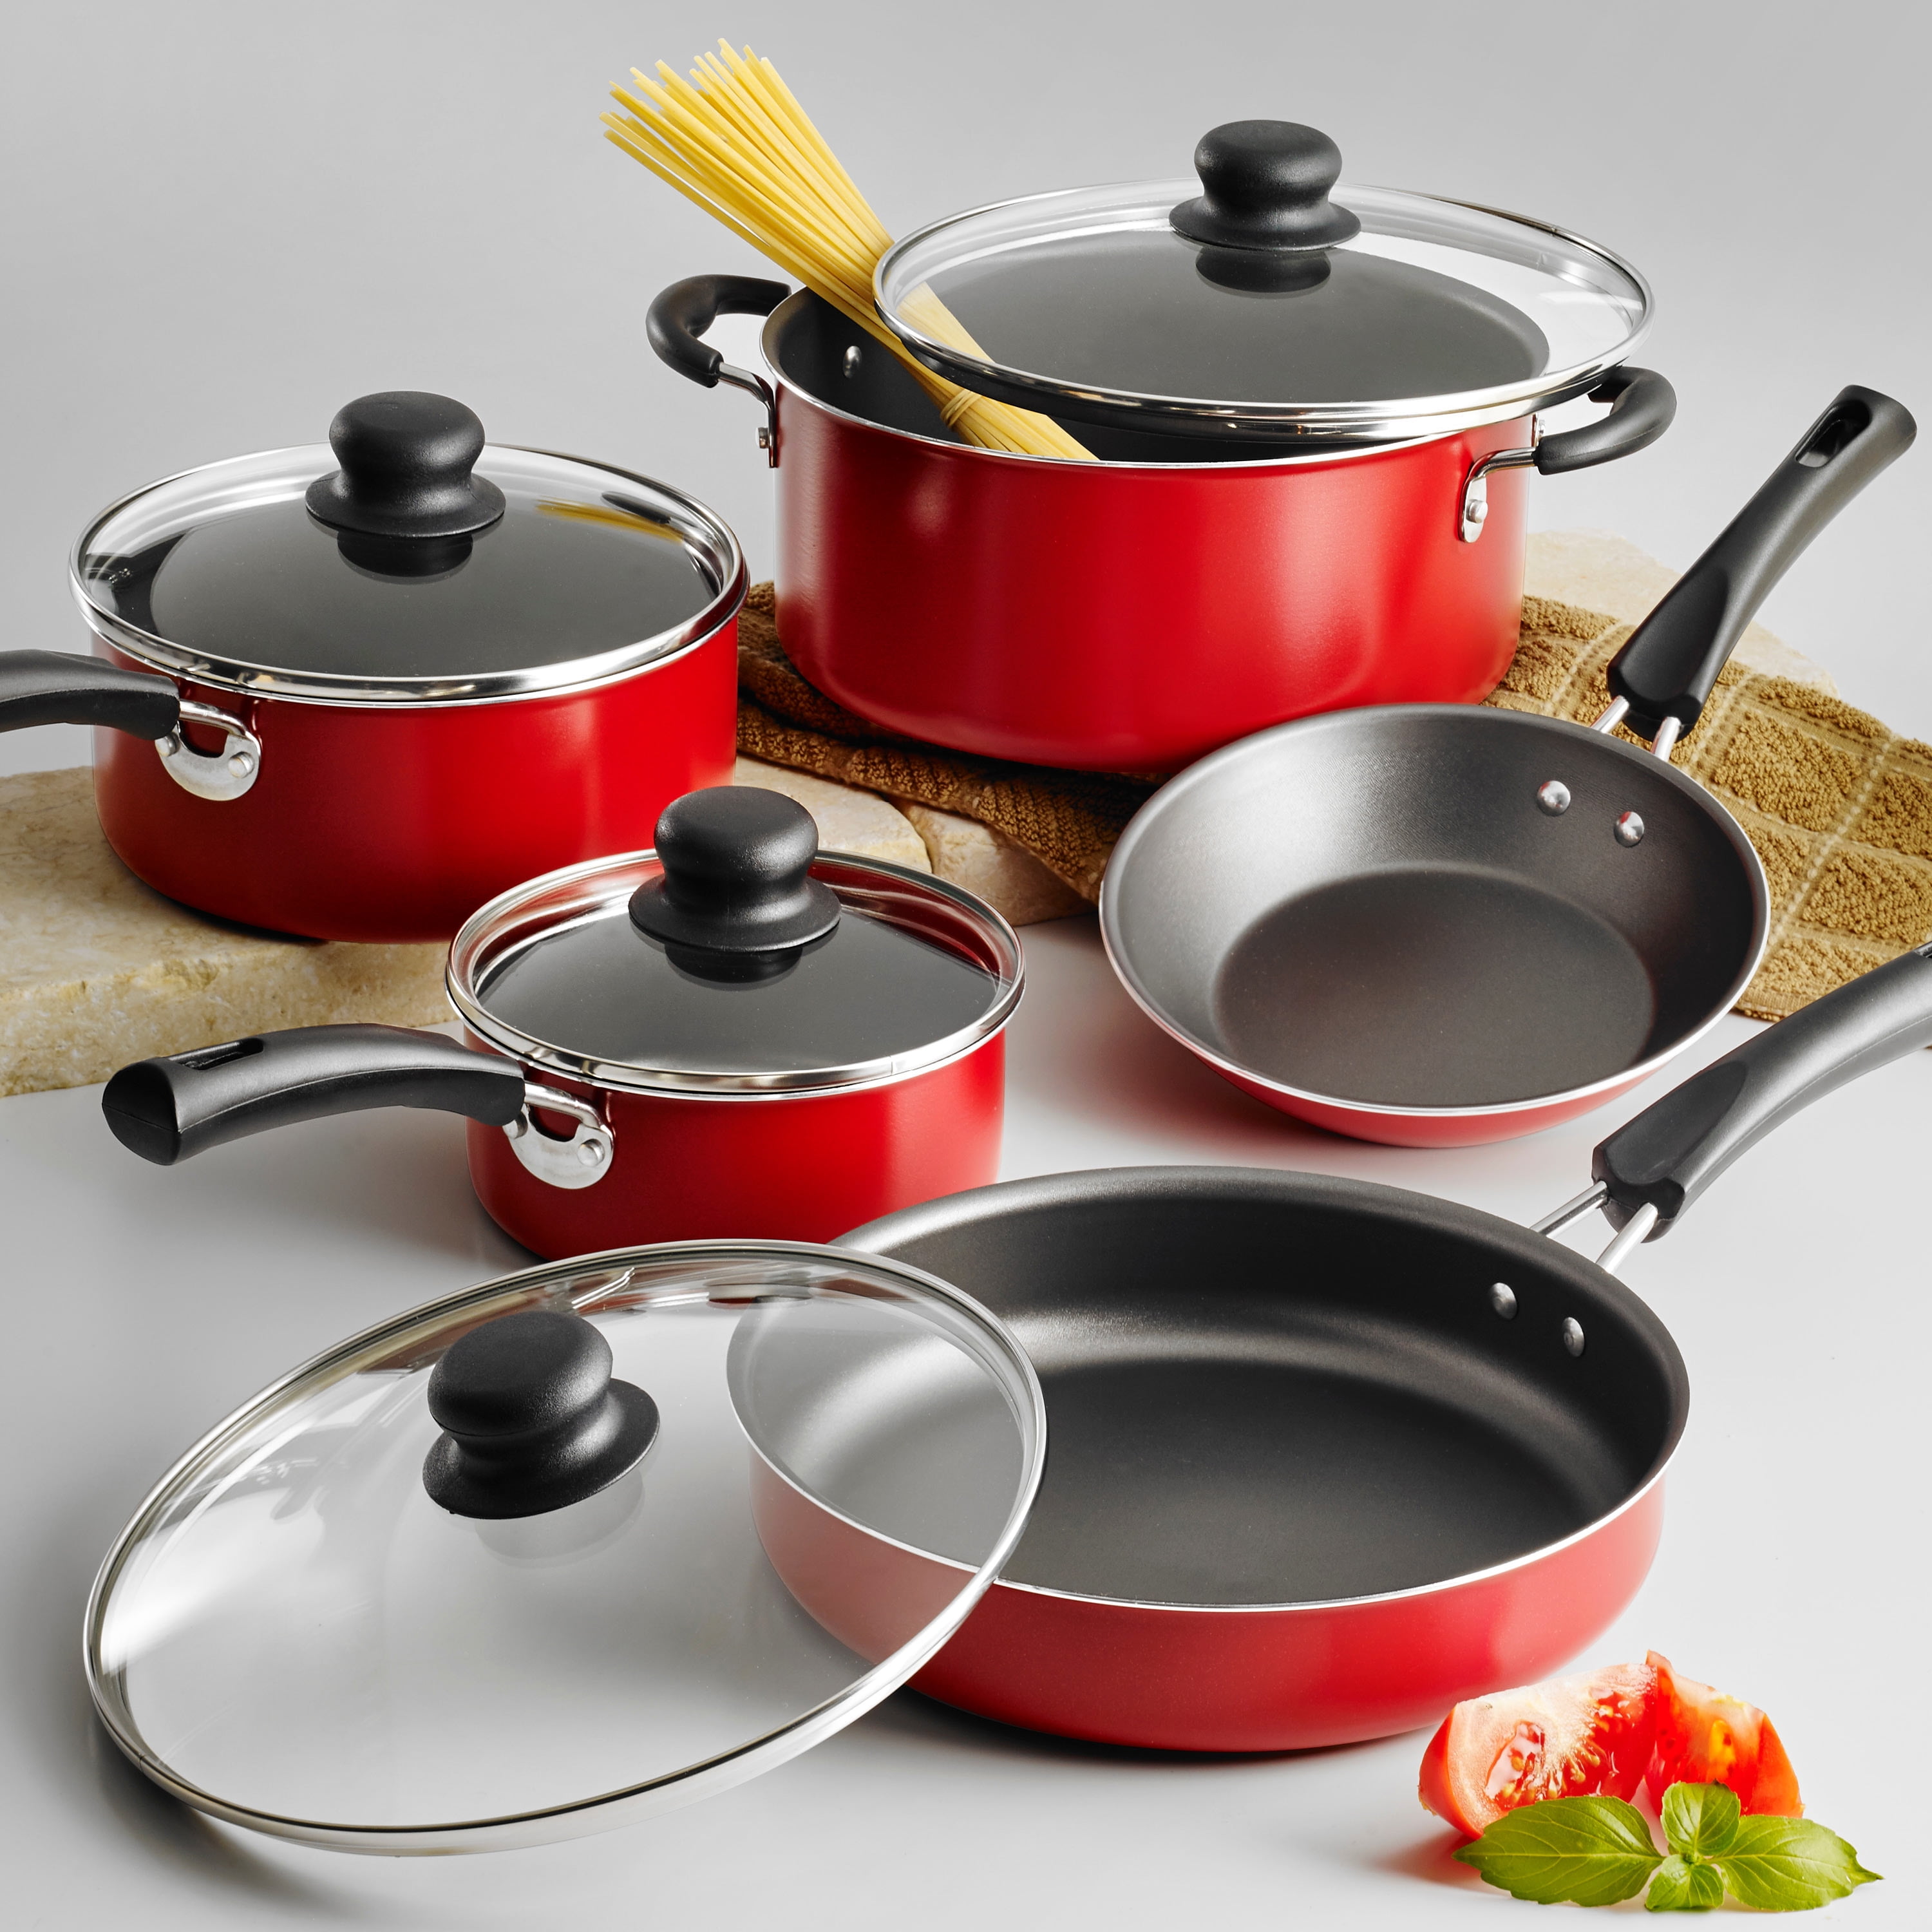 9 Pieces Nonstick Pots & Pans Cookware Set Kitchen Kitchenware Variety Pack